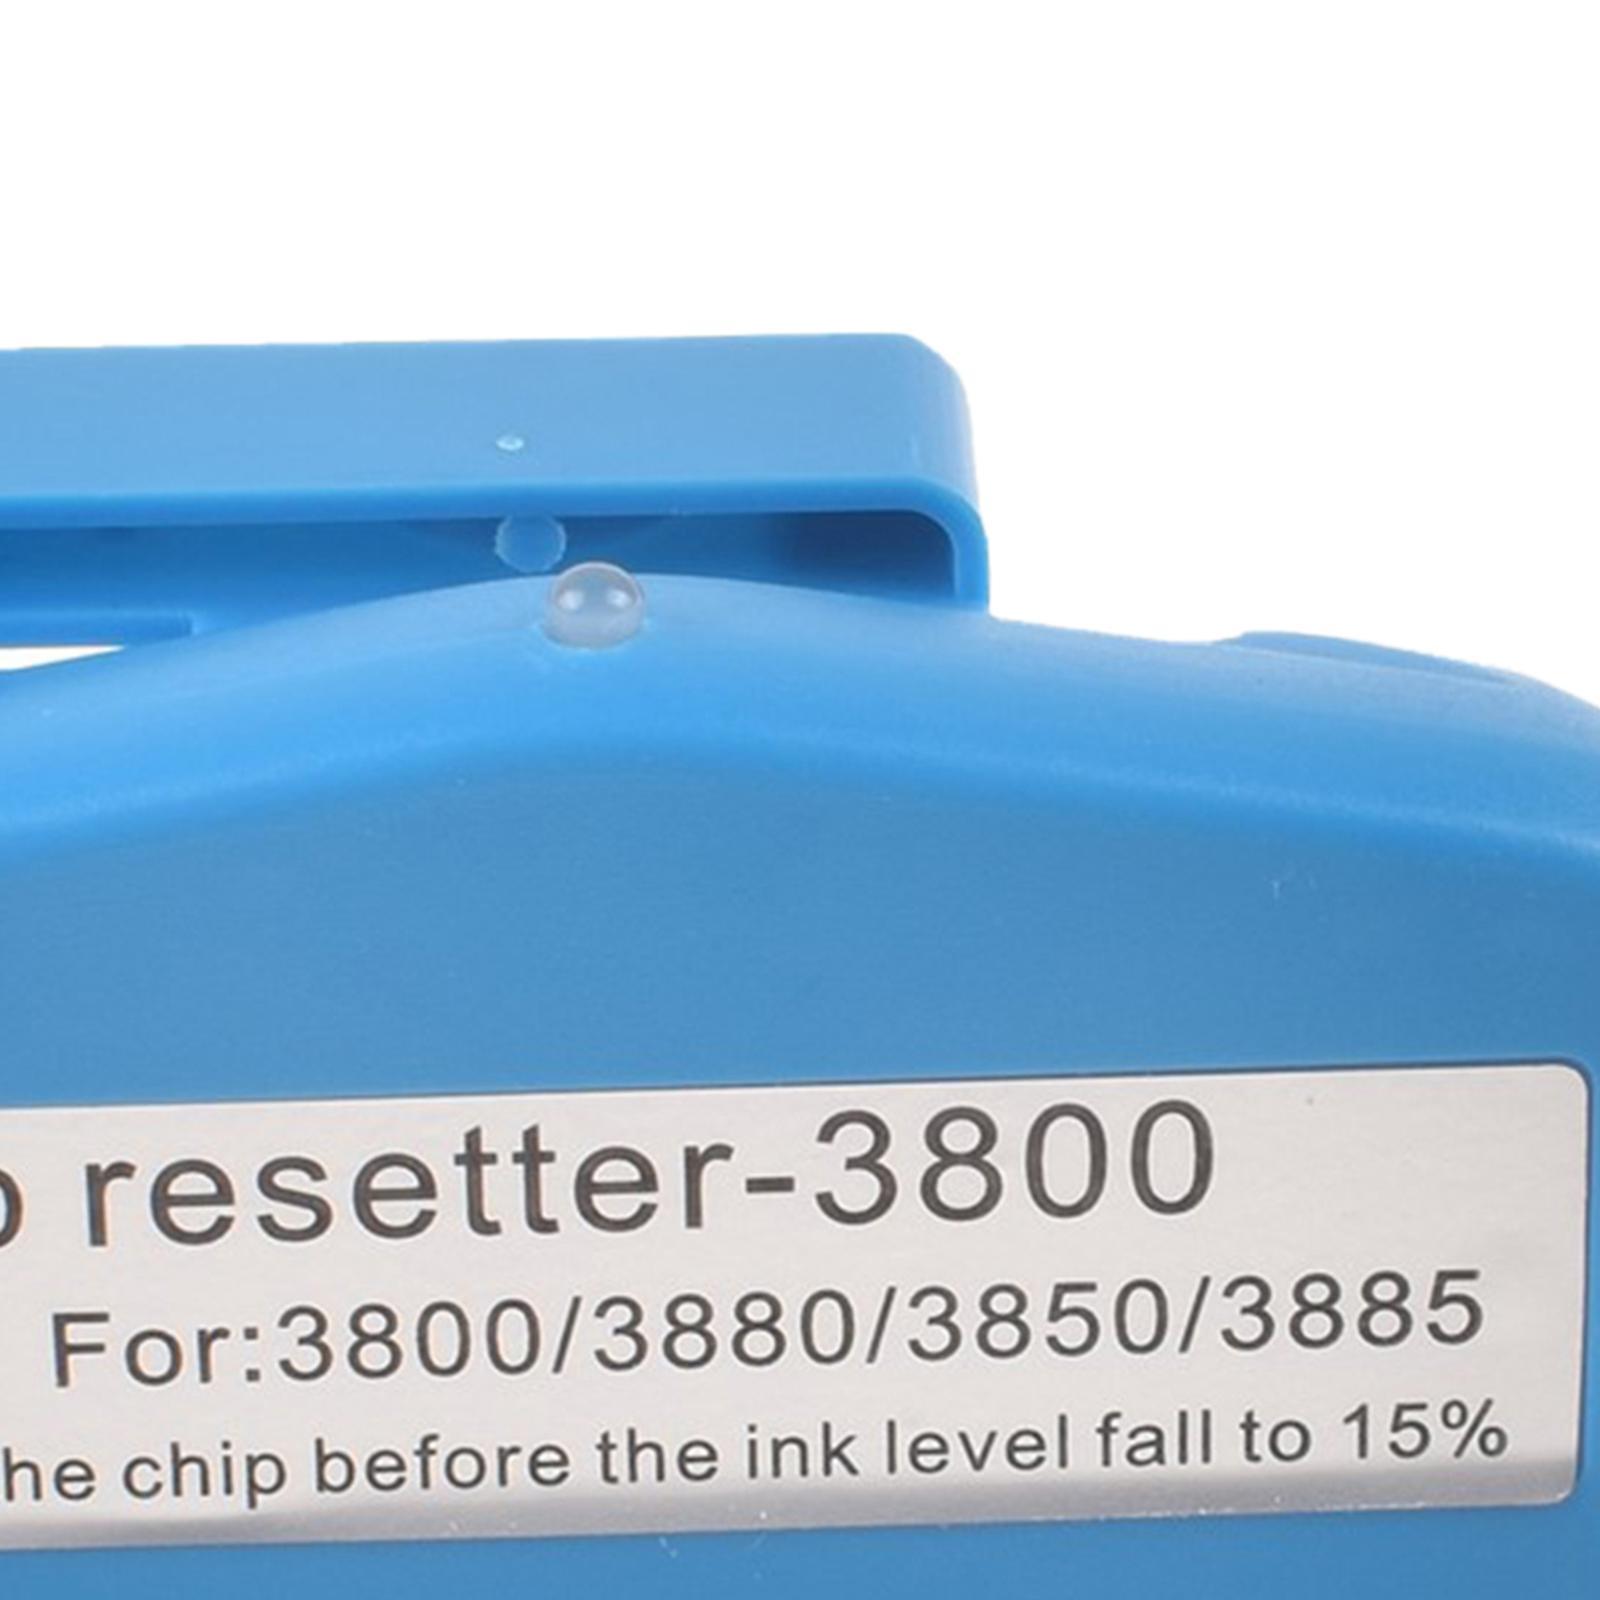 Universal Maintenance Chip Resetter, for Epson Stylus Pro 3800 3800C 3850 3880 for Cartridge and Maintenance Box